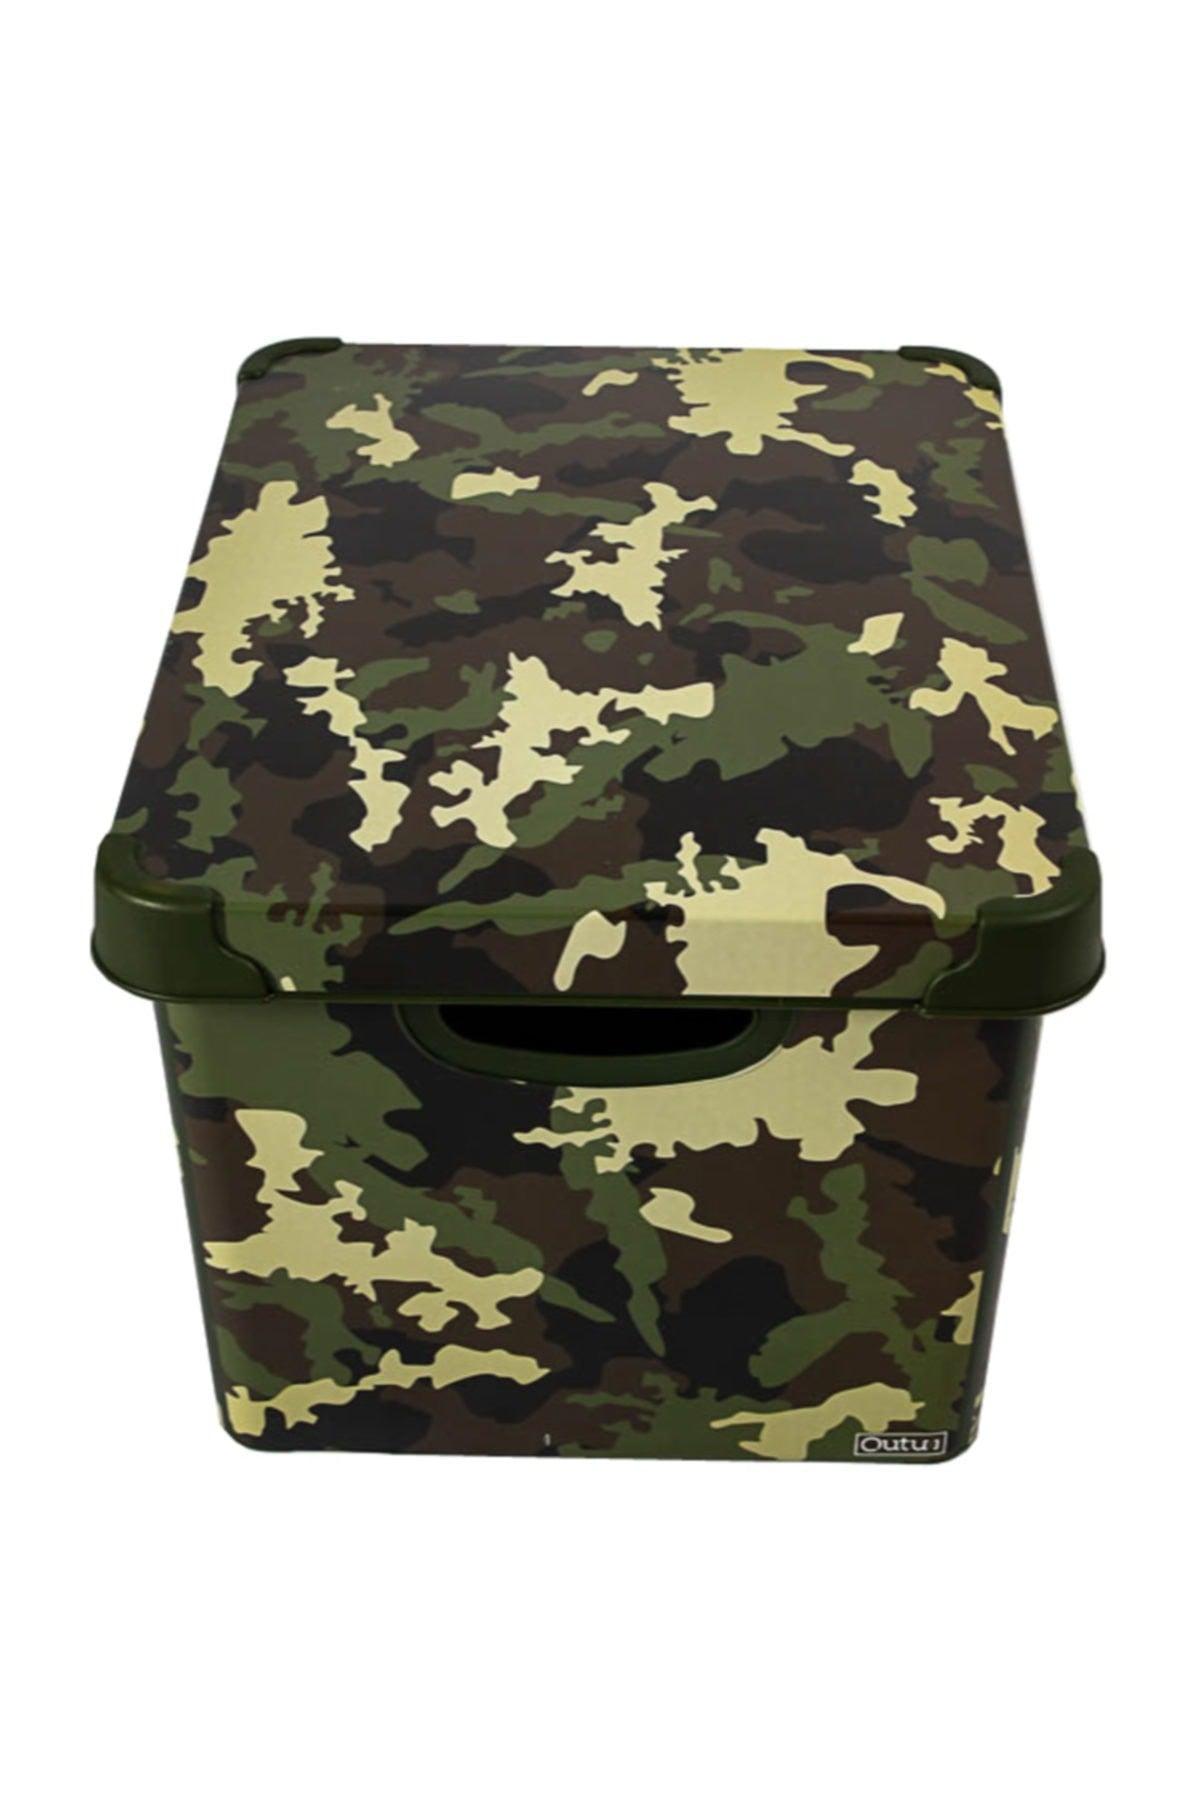 Style Box Camouflage Decorative Box - 20 lt.